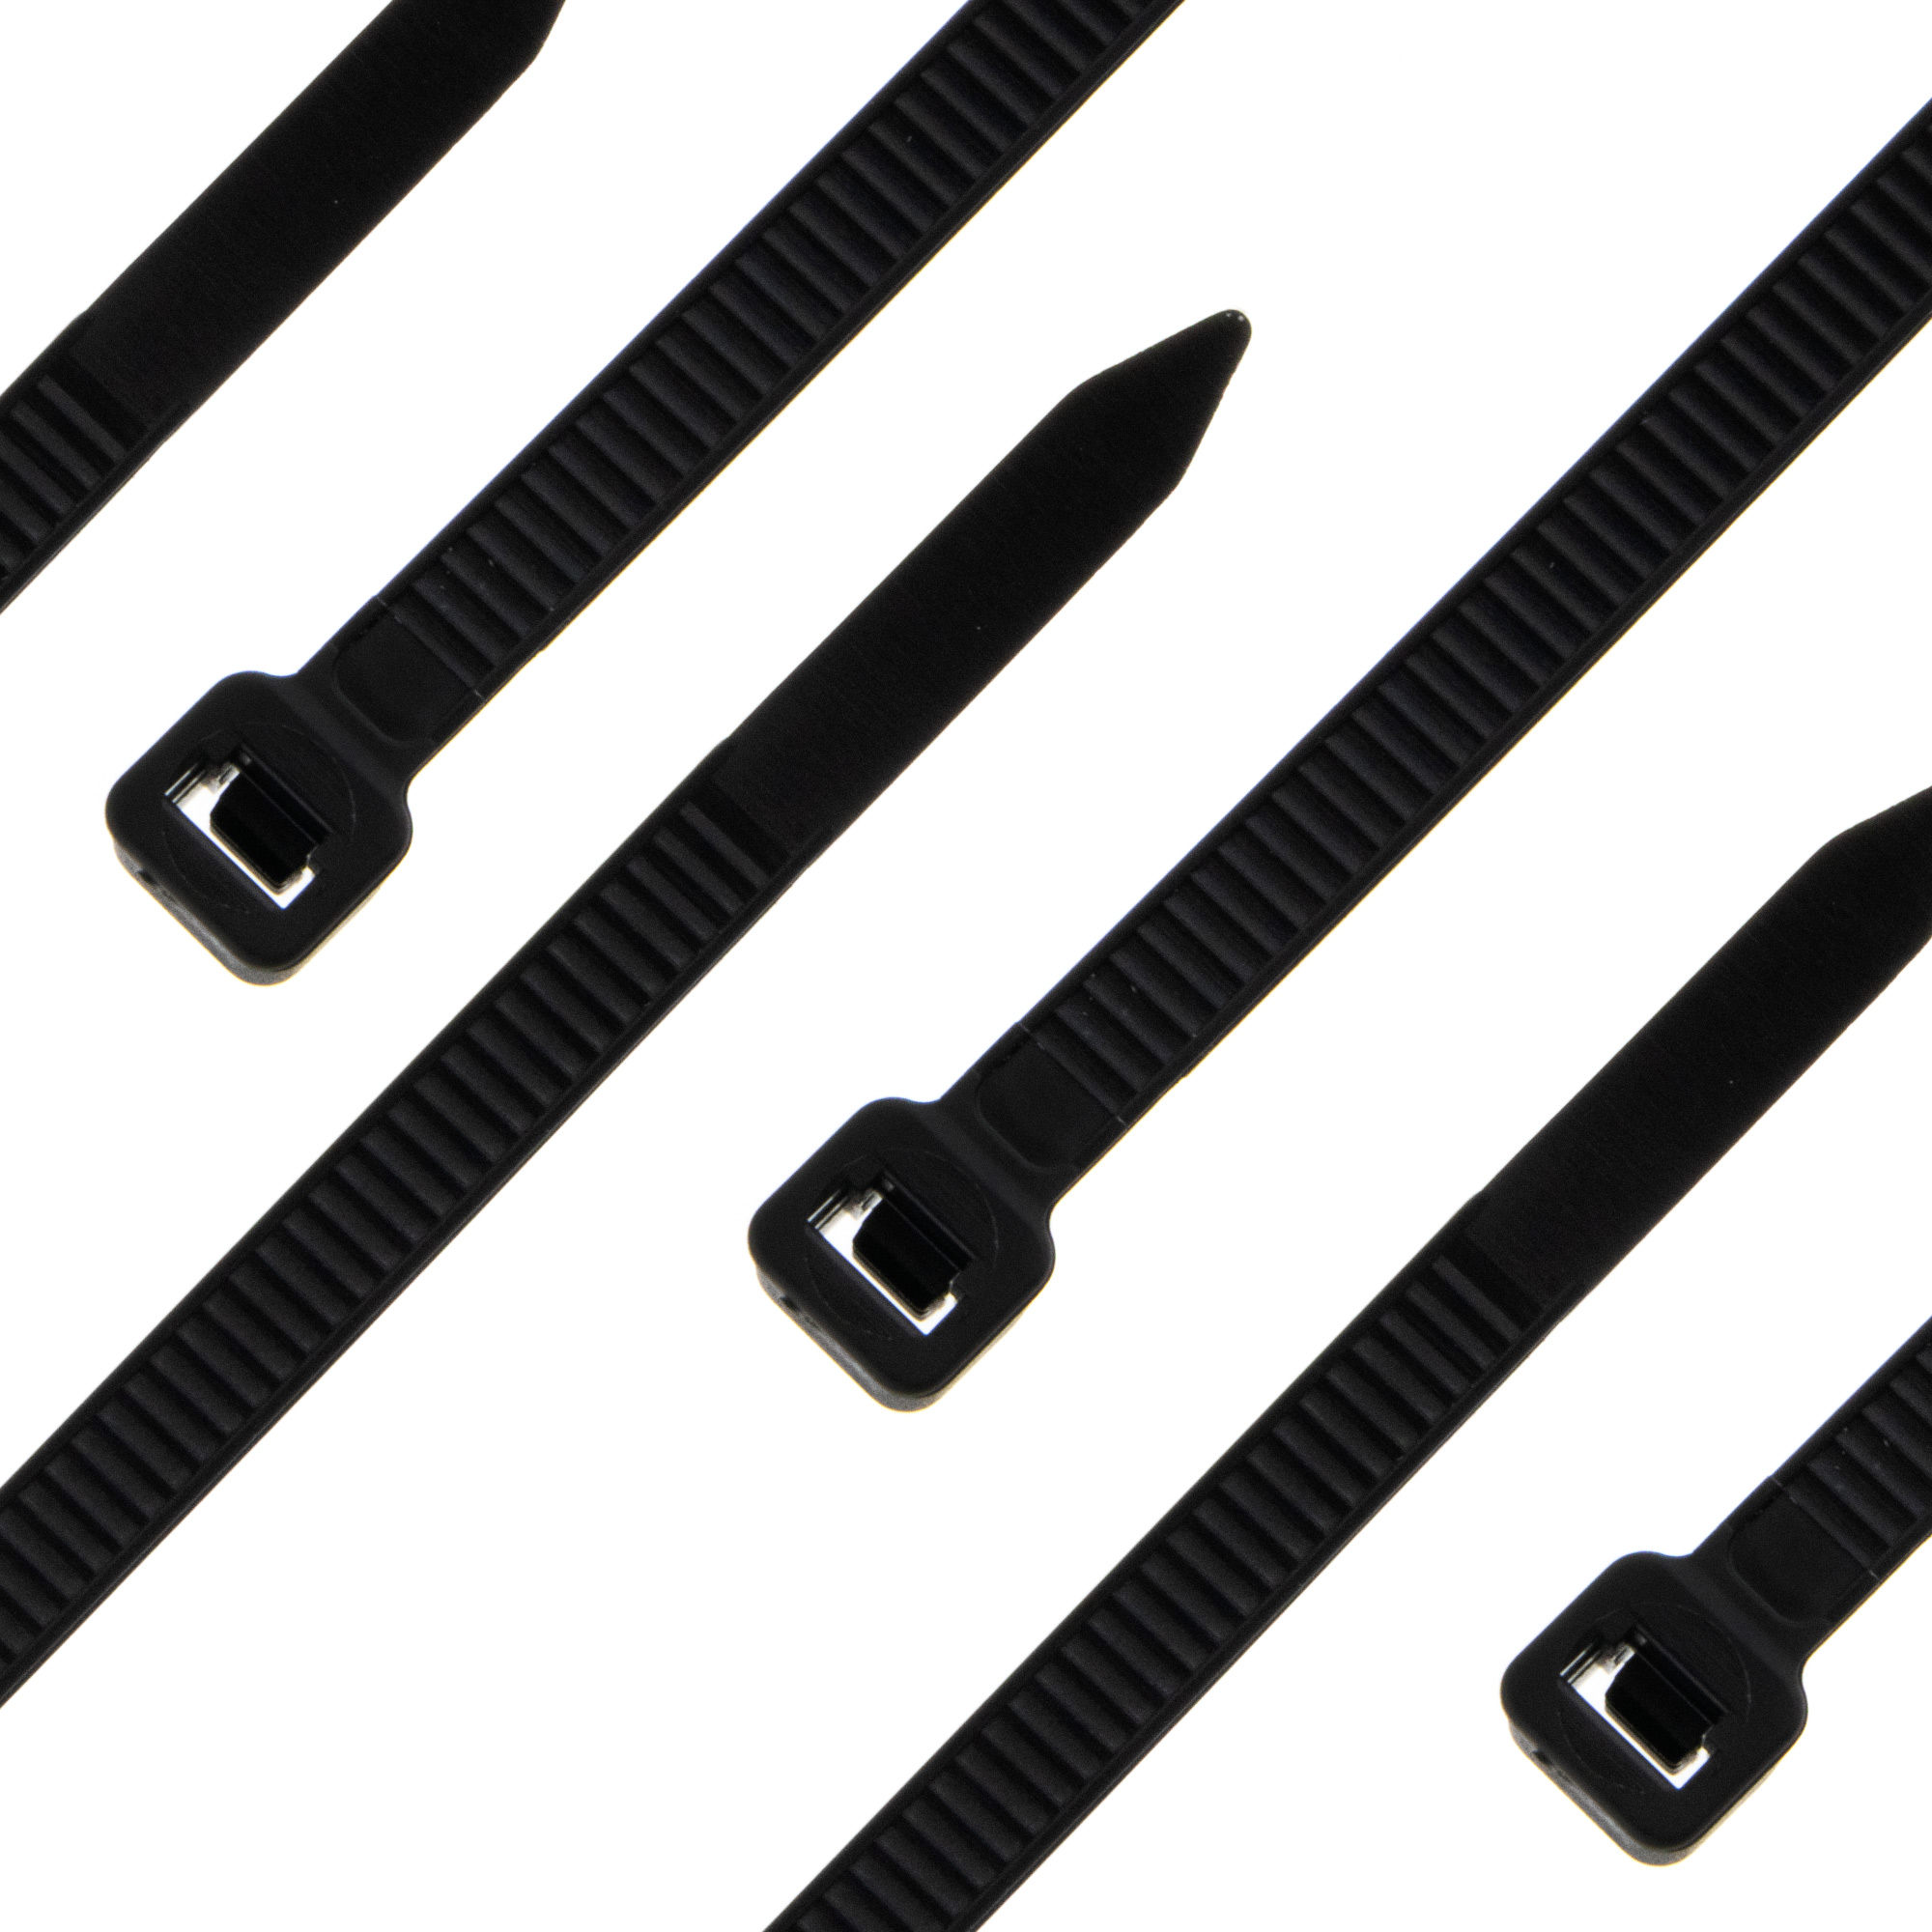 Cable tie self-locking 300 x 4,8mm, black, 100PCS